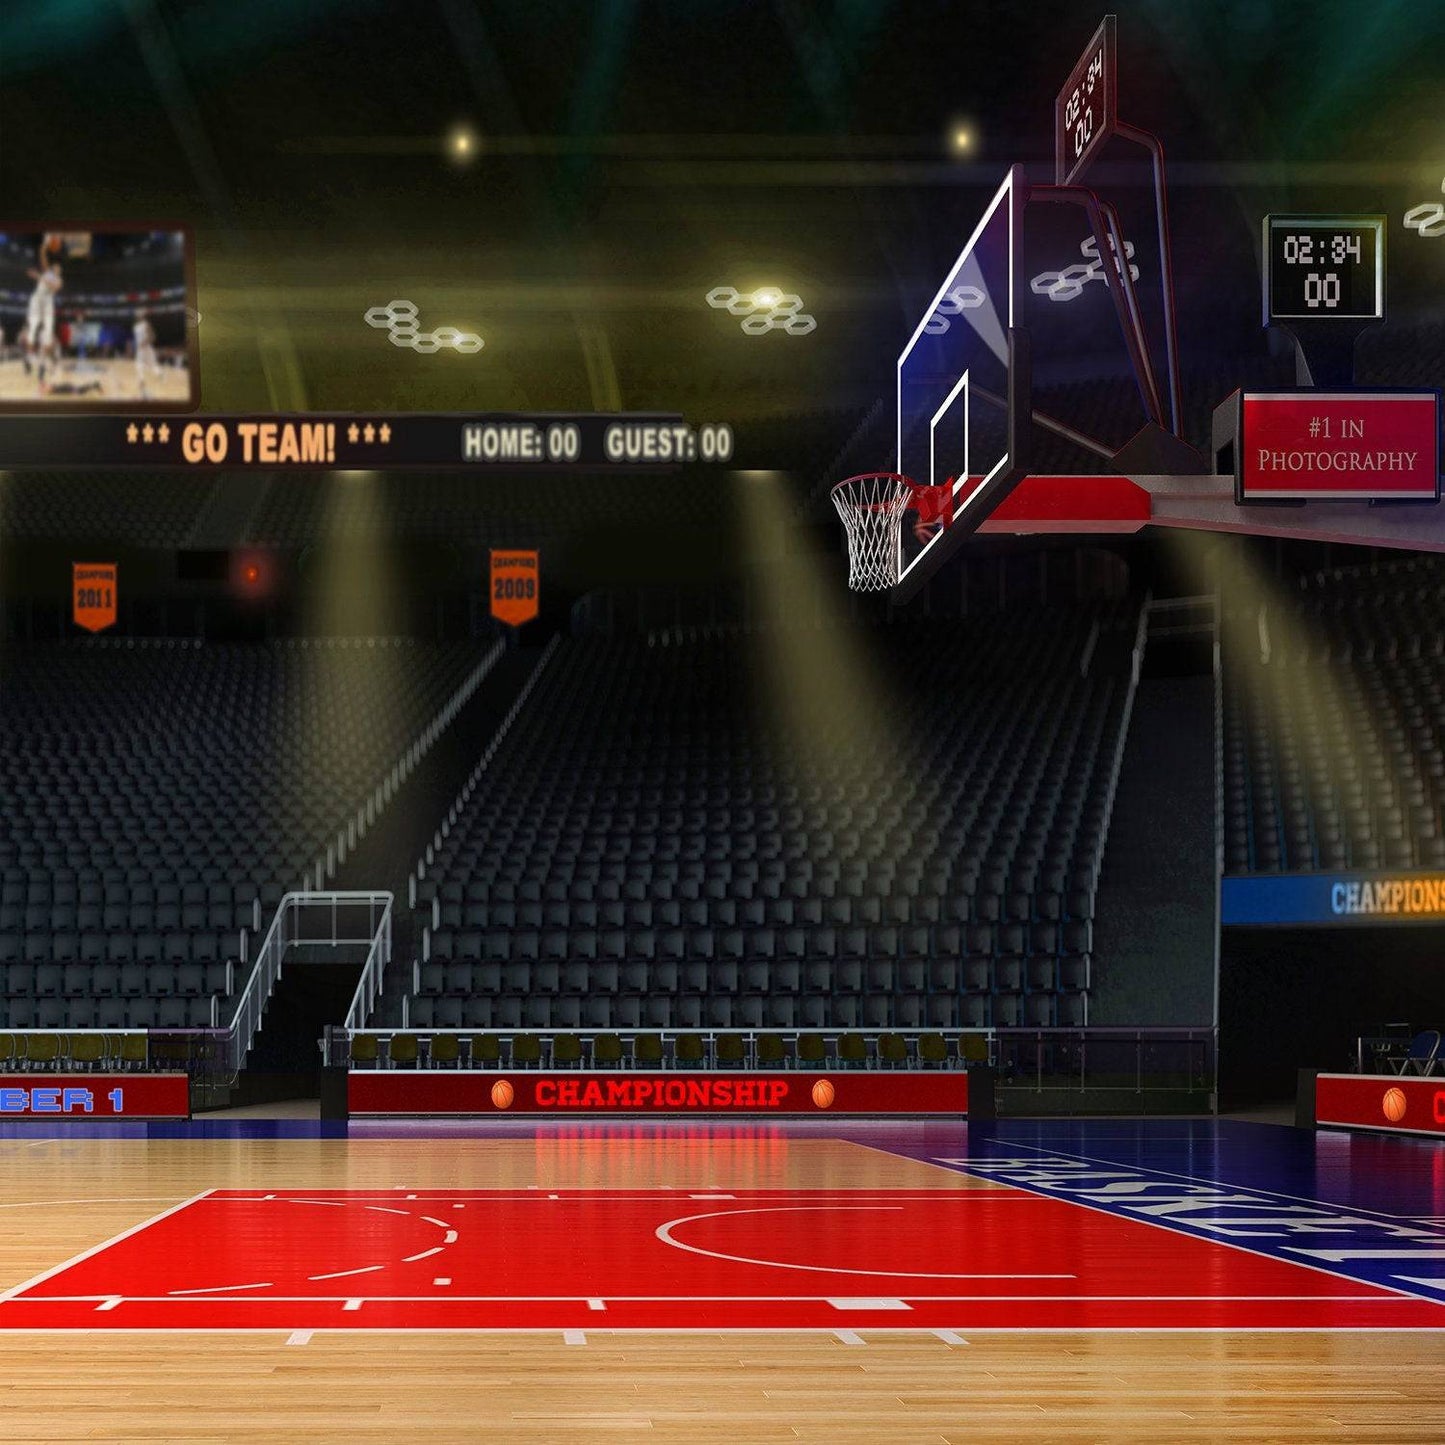 NBA Basketball Court Backdrop - Pro 10  x 10  